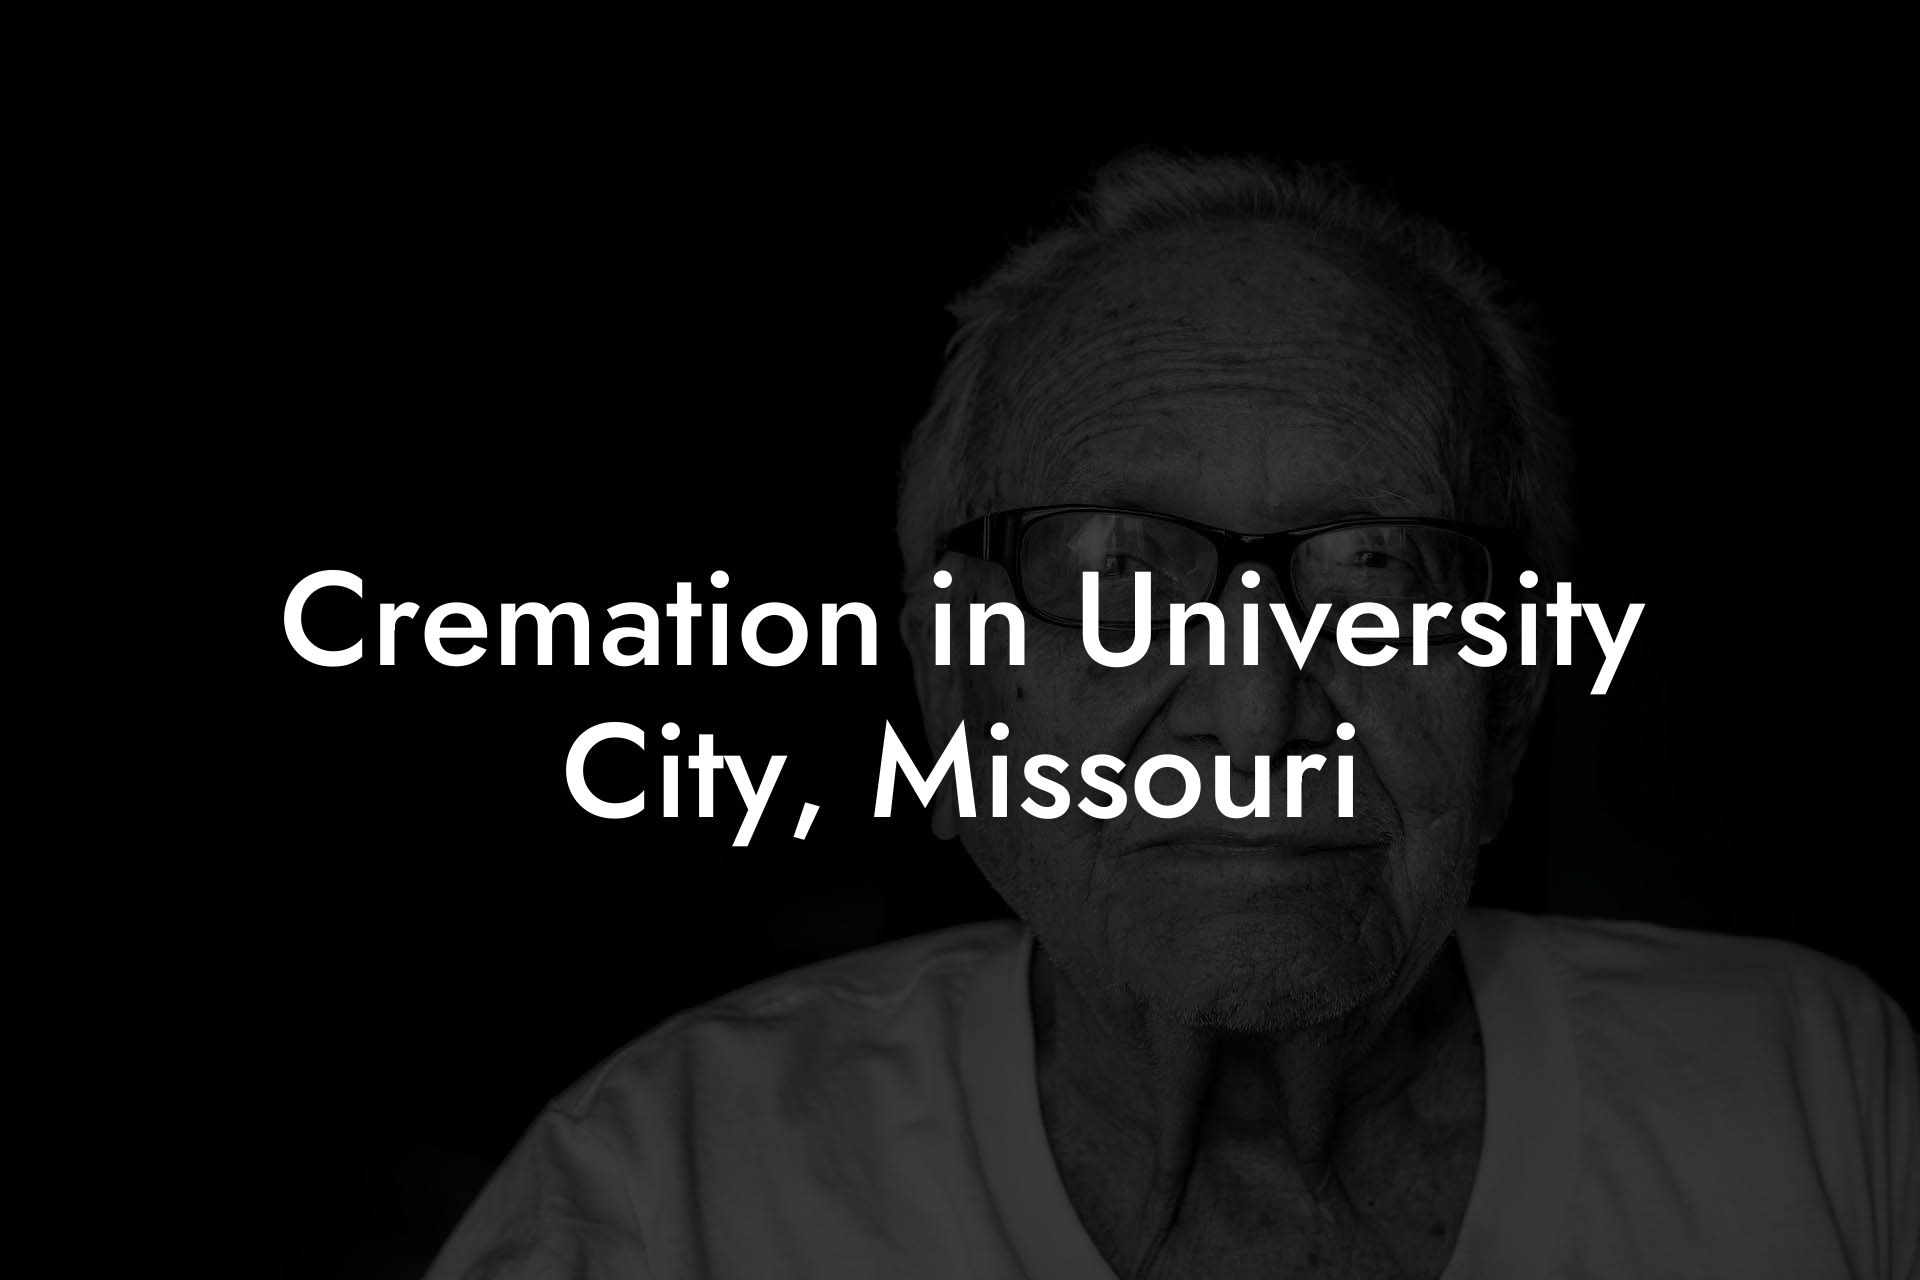 Cremation in University City, Missouri